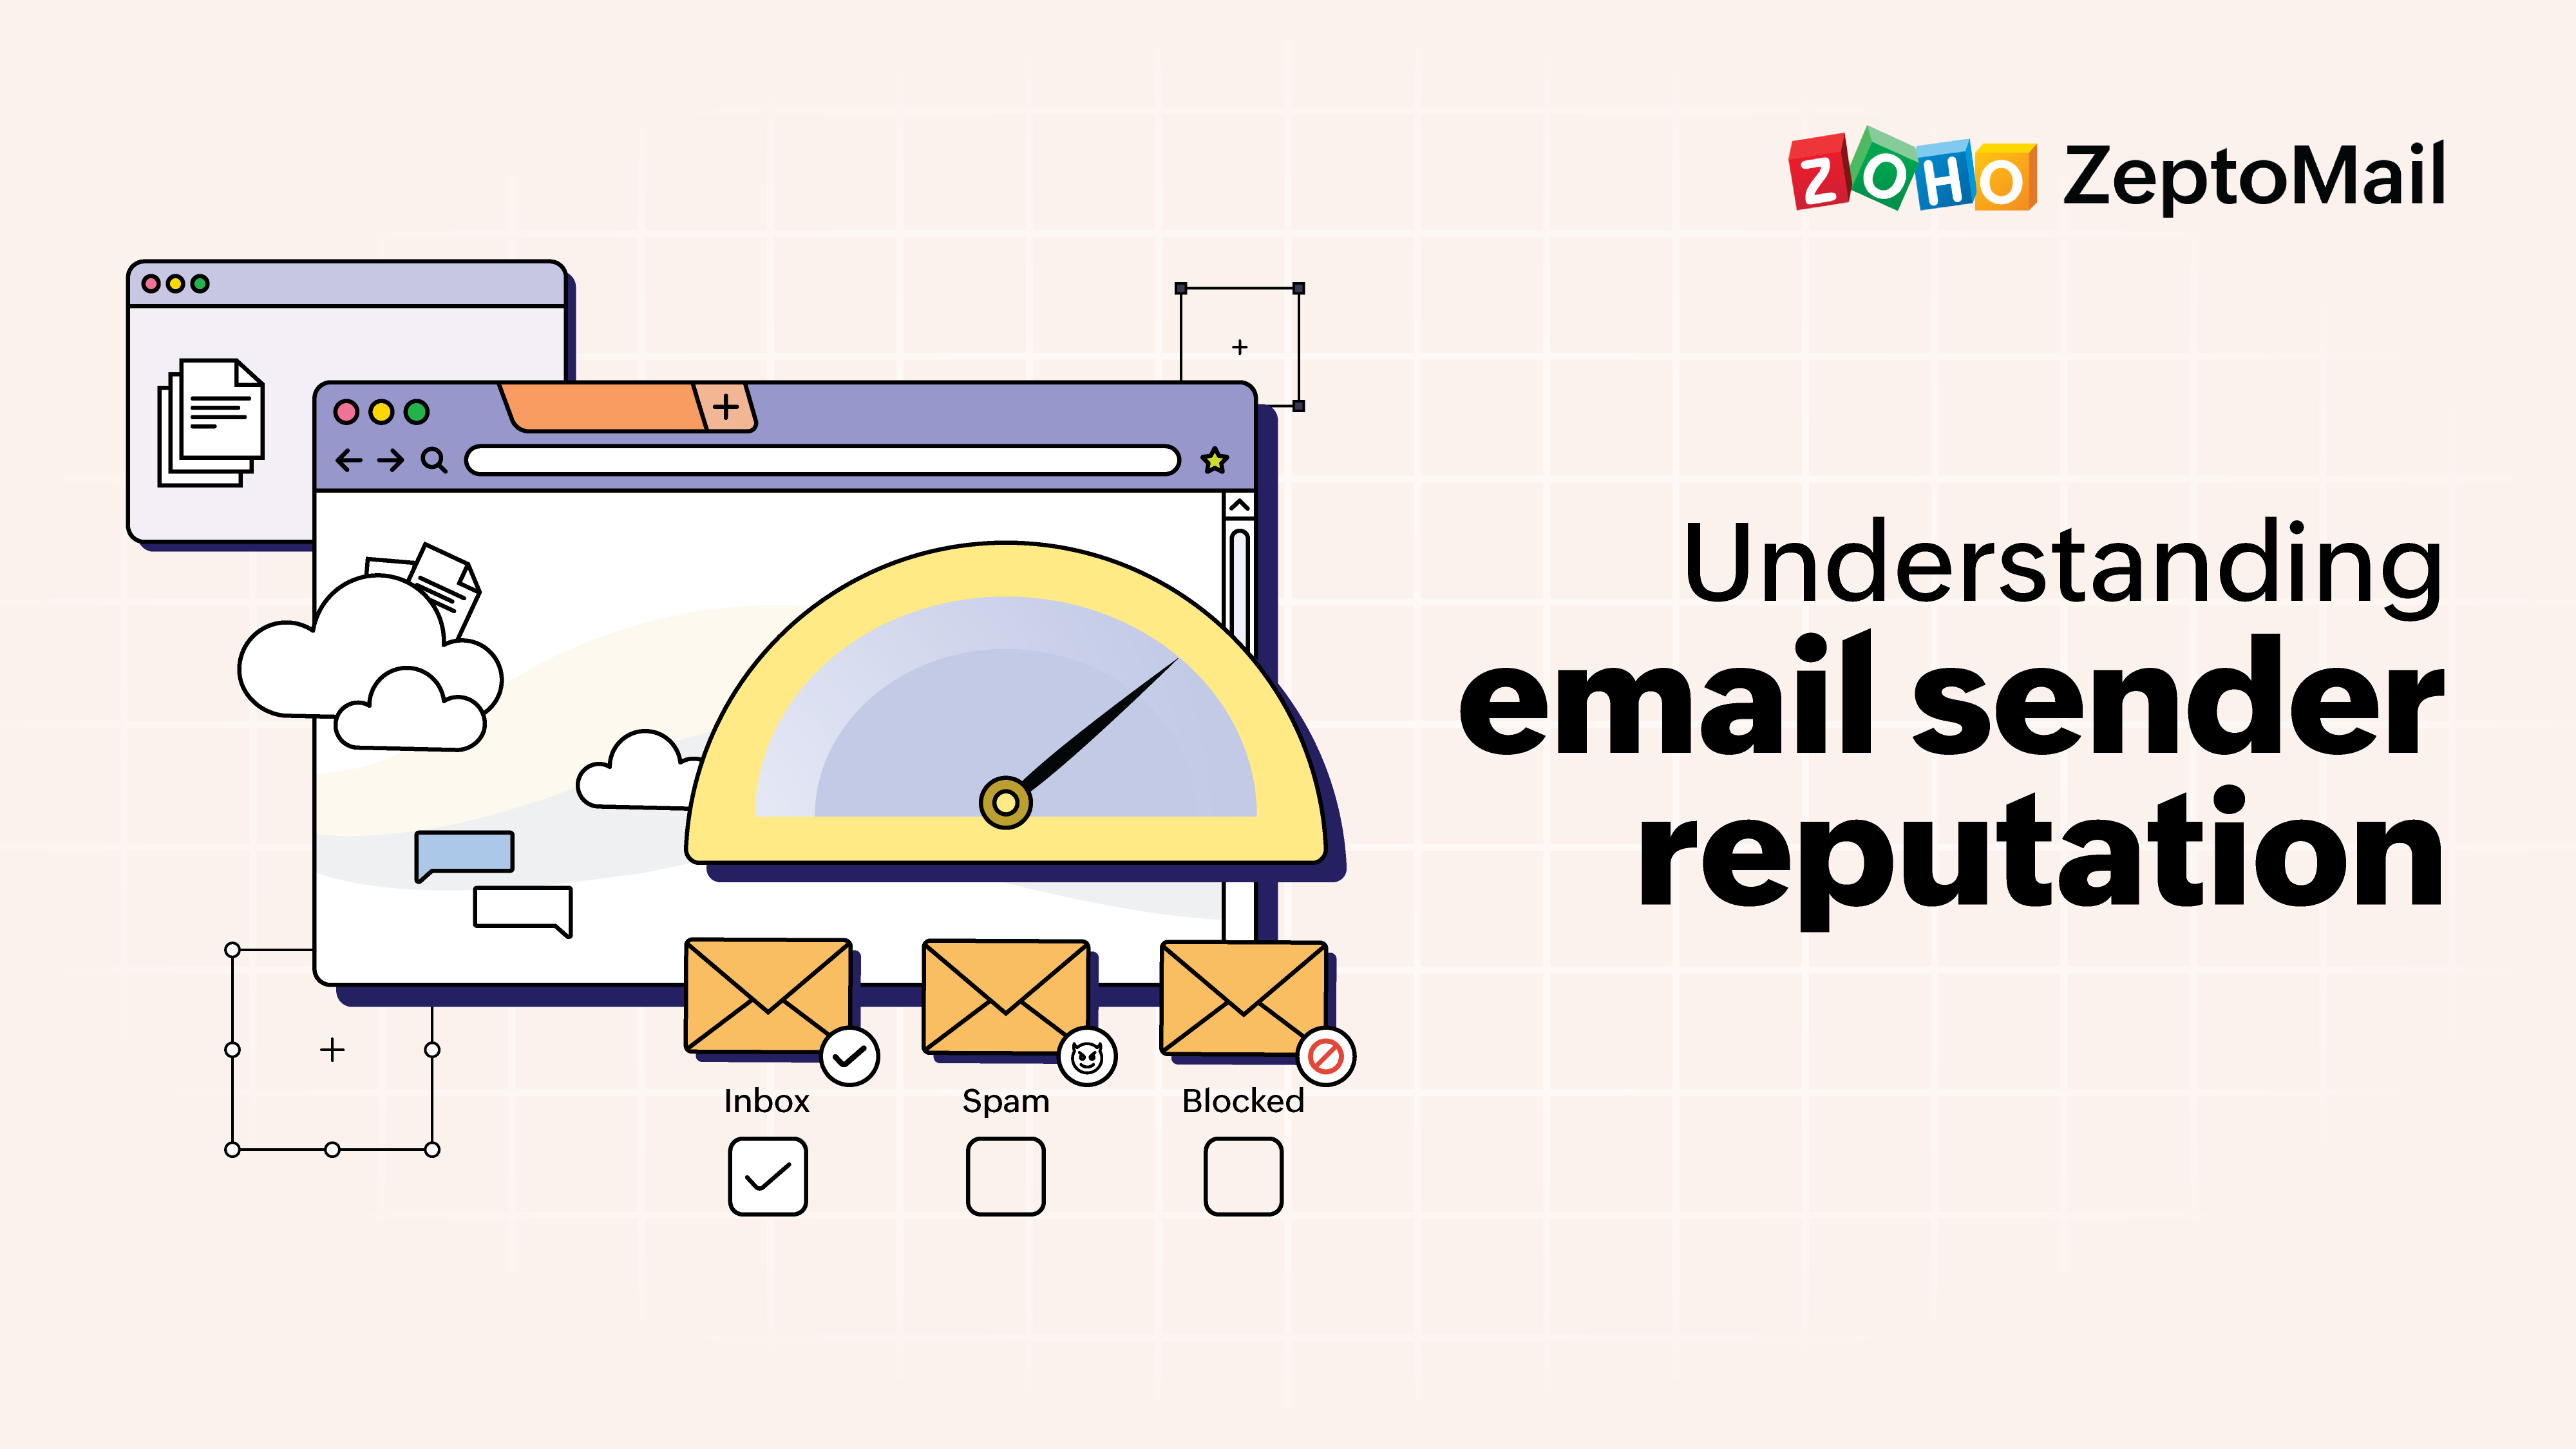 Email sender reputation